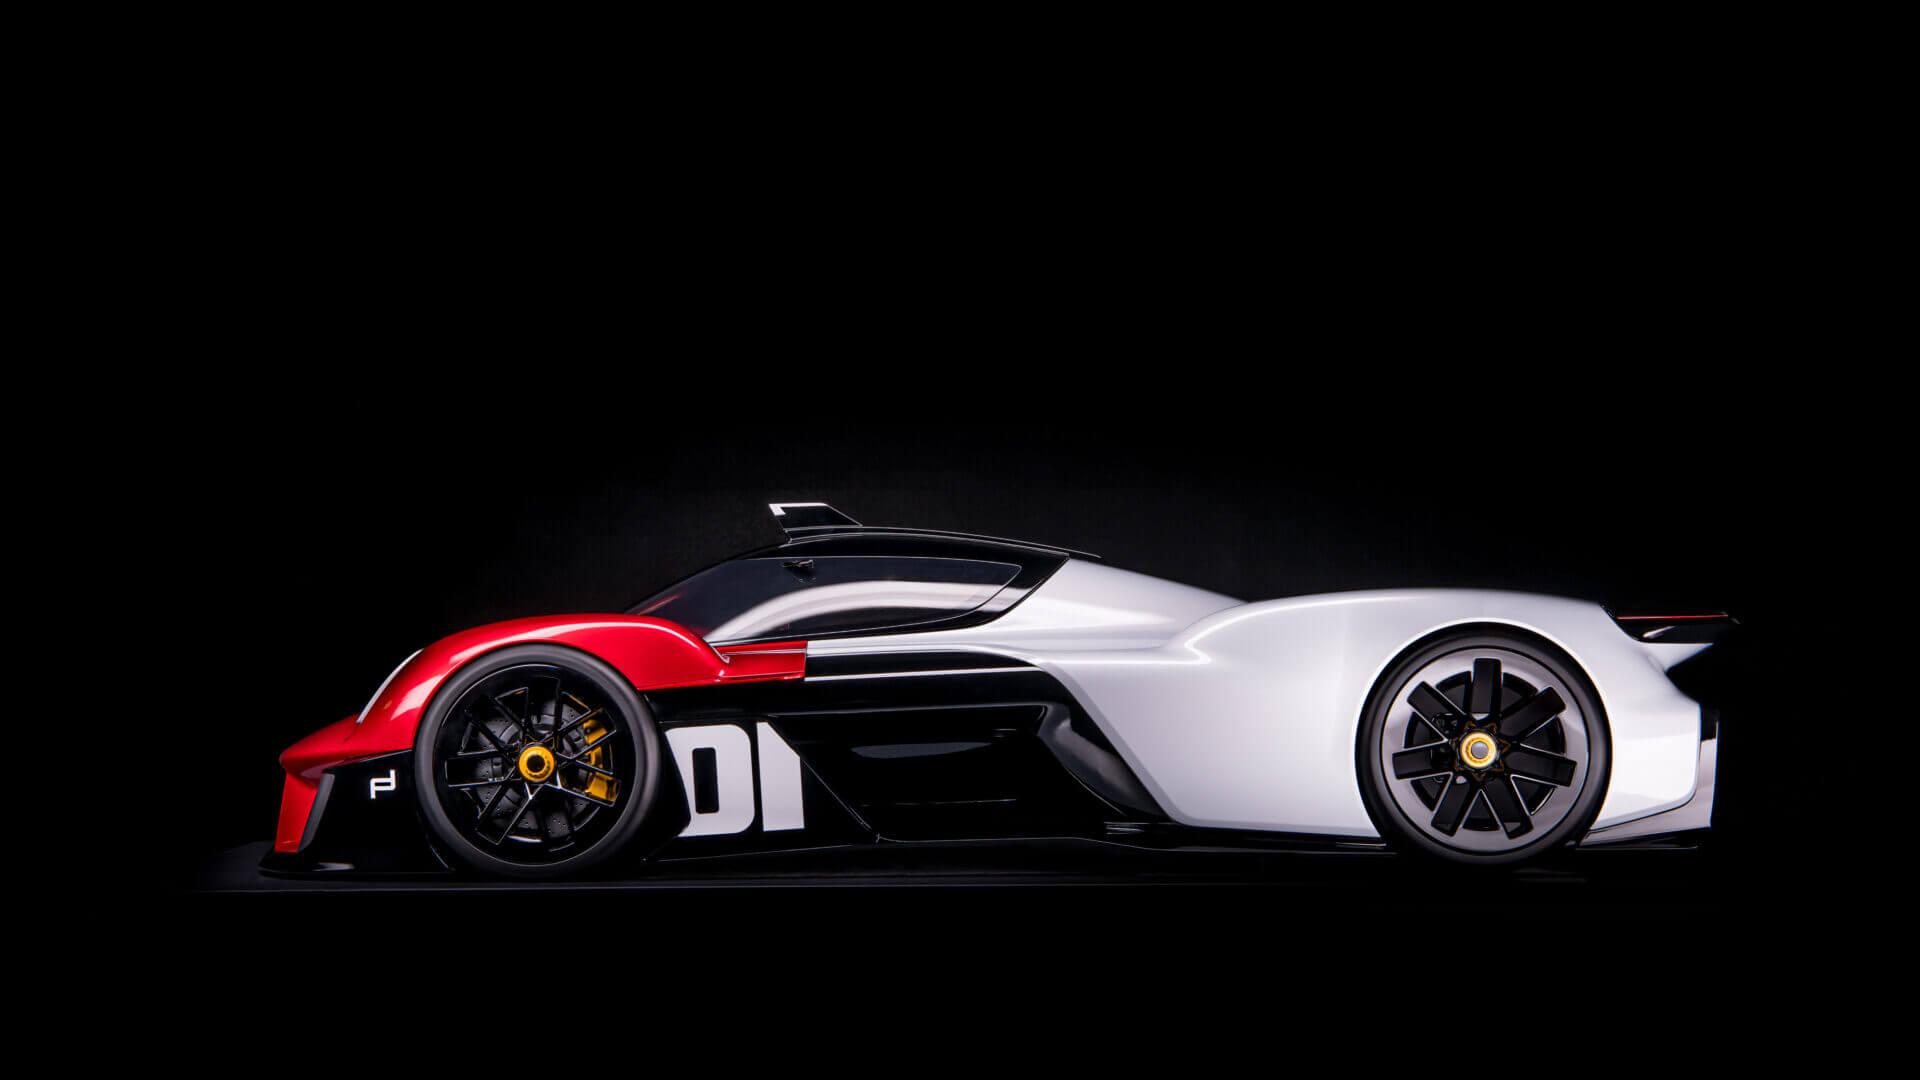 What is the Porsche Vision Gran Turismo?